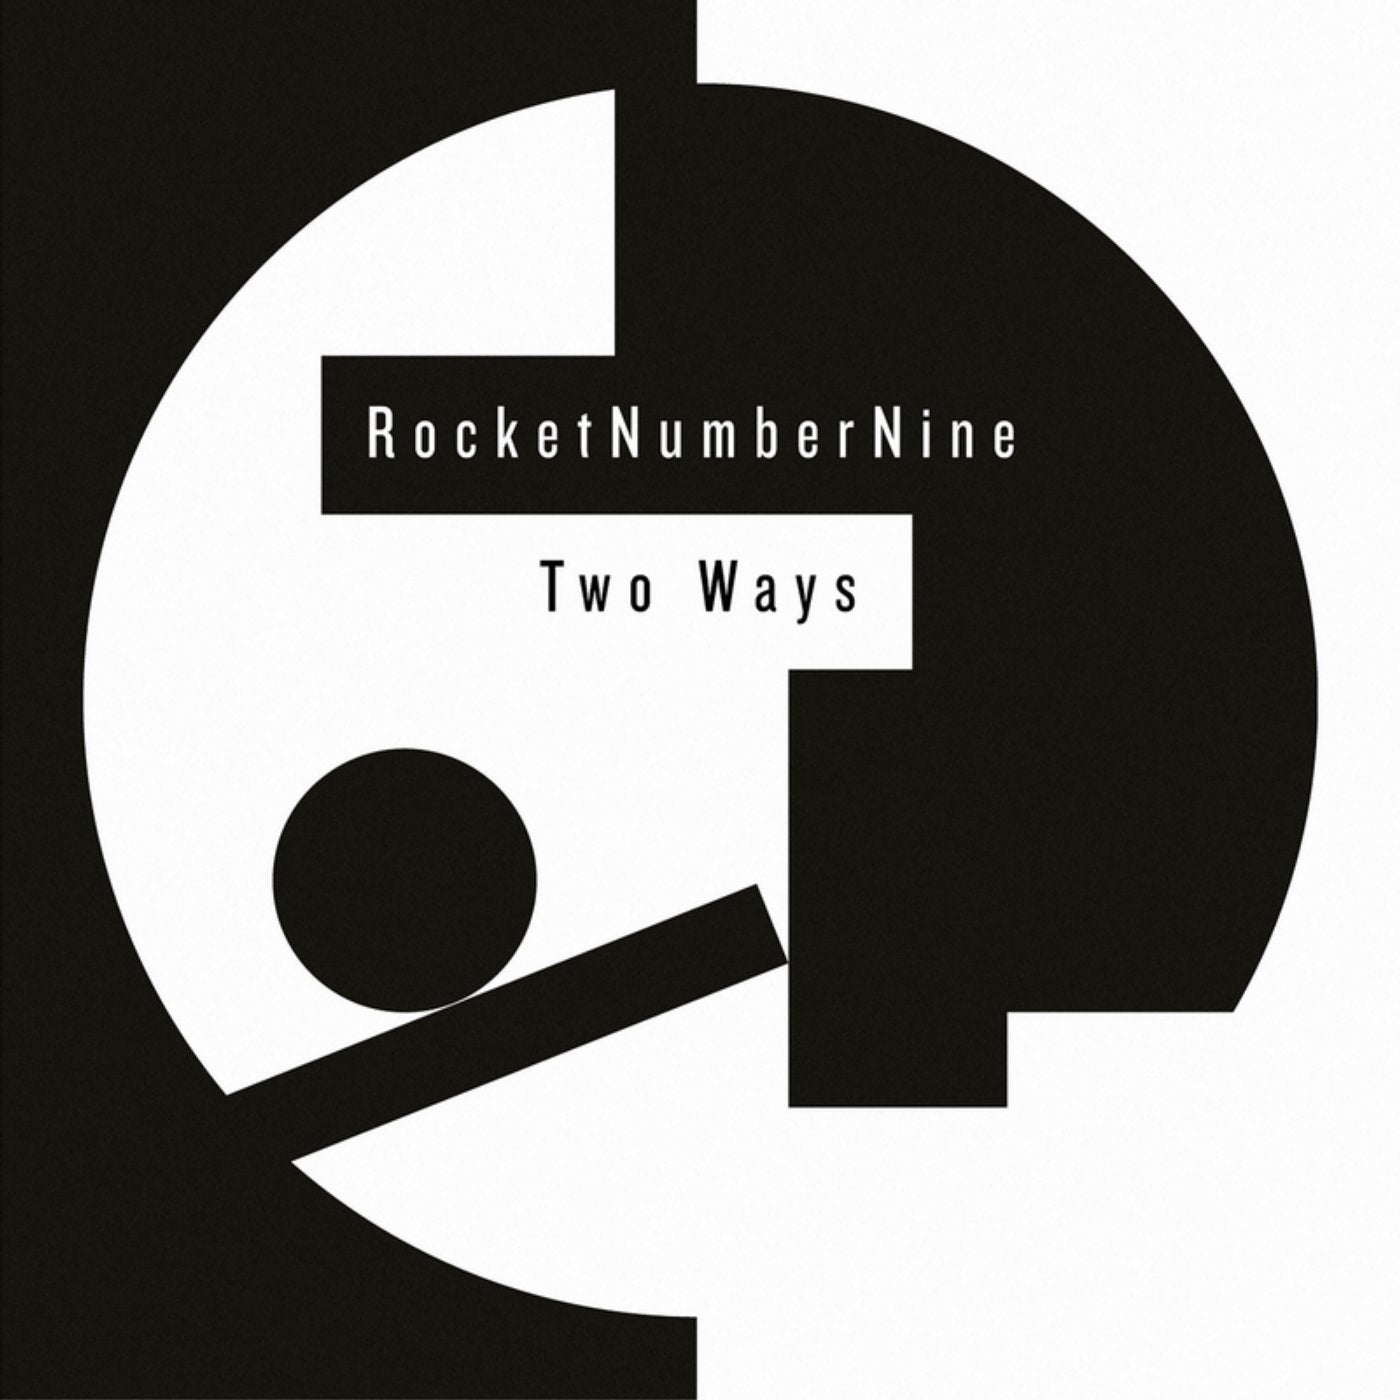 Rocket number. Two ways. Way 2 Music. Twos слушать.